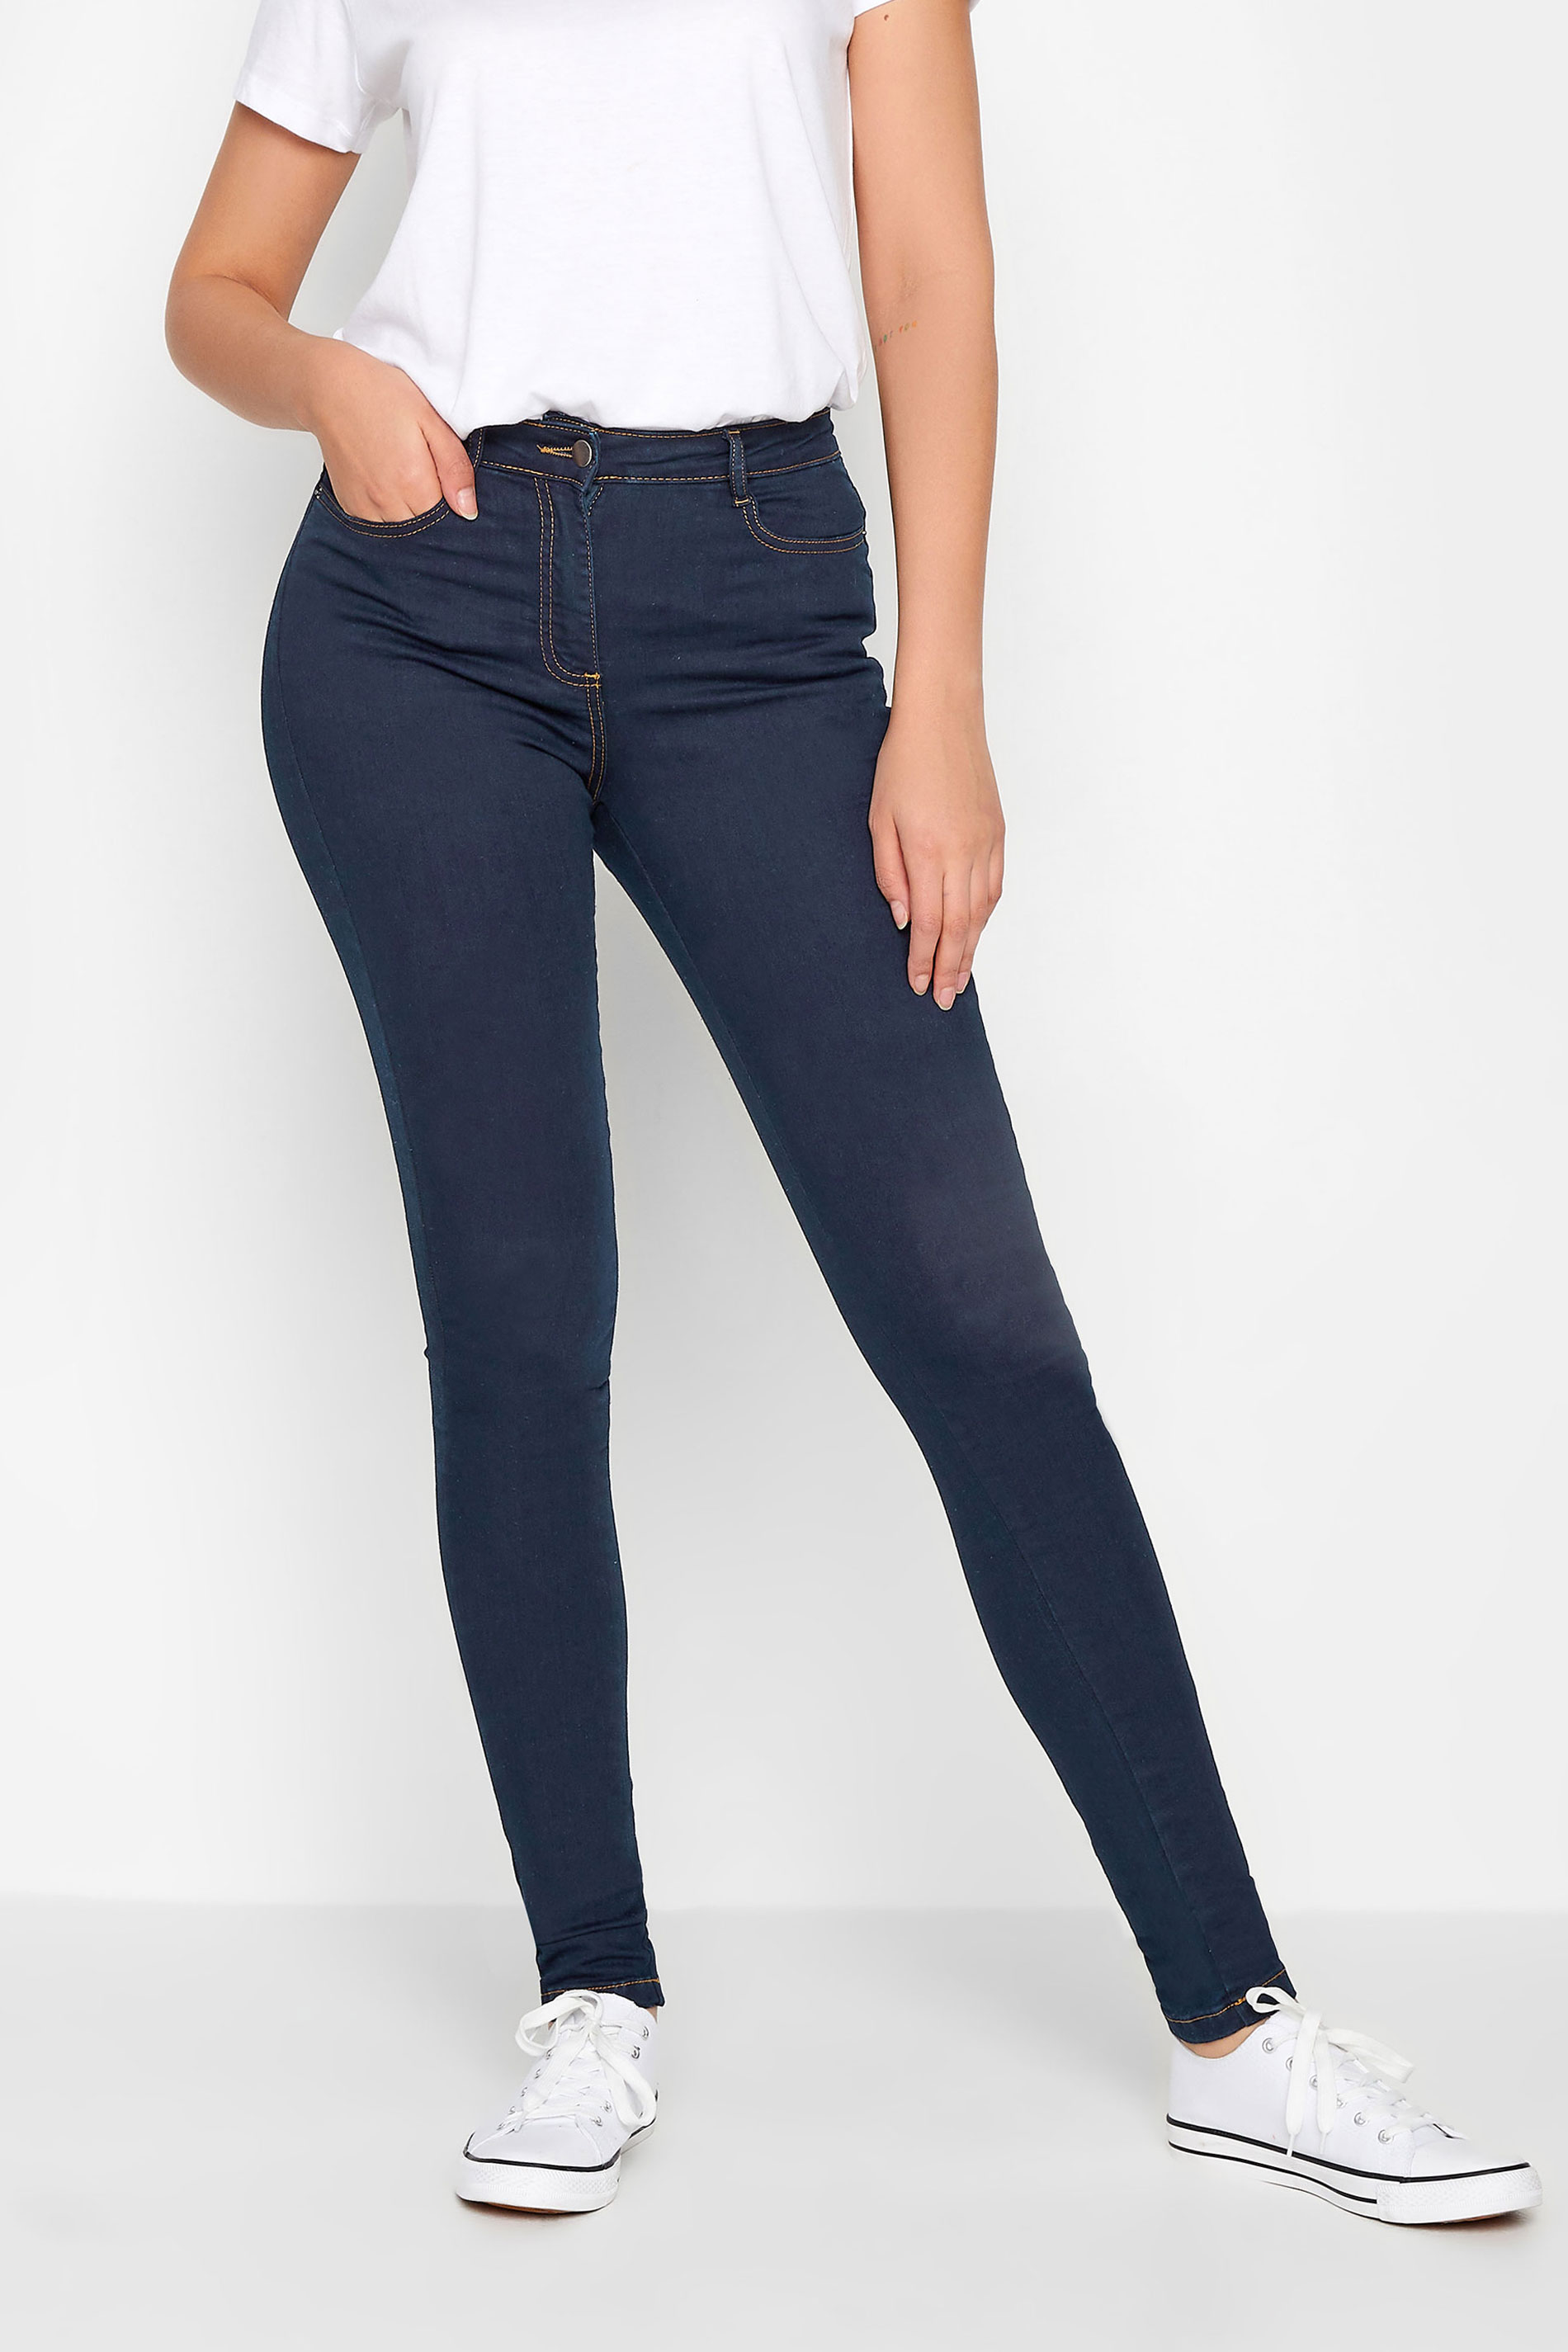 LTS Tall Women's Indigo Blue Washed AVA Skinny Jeans | Long Tall Sally 1